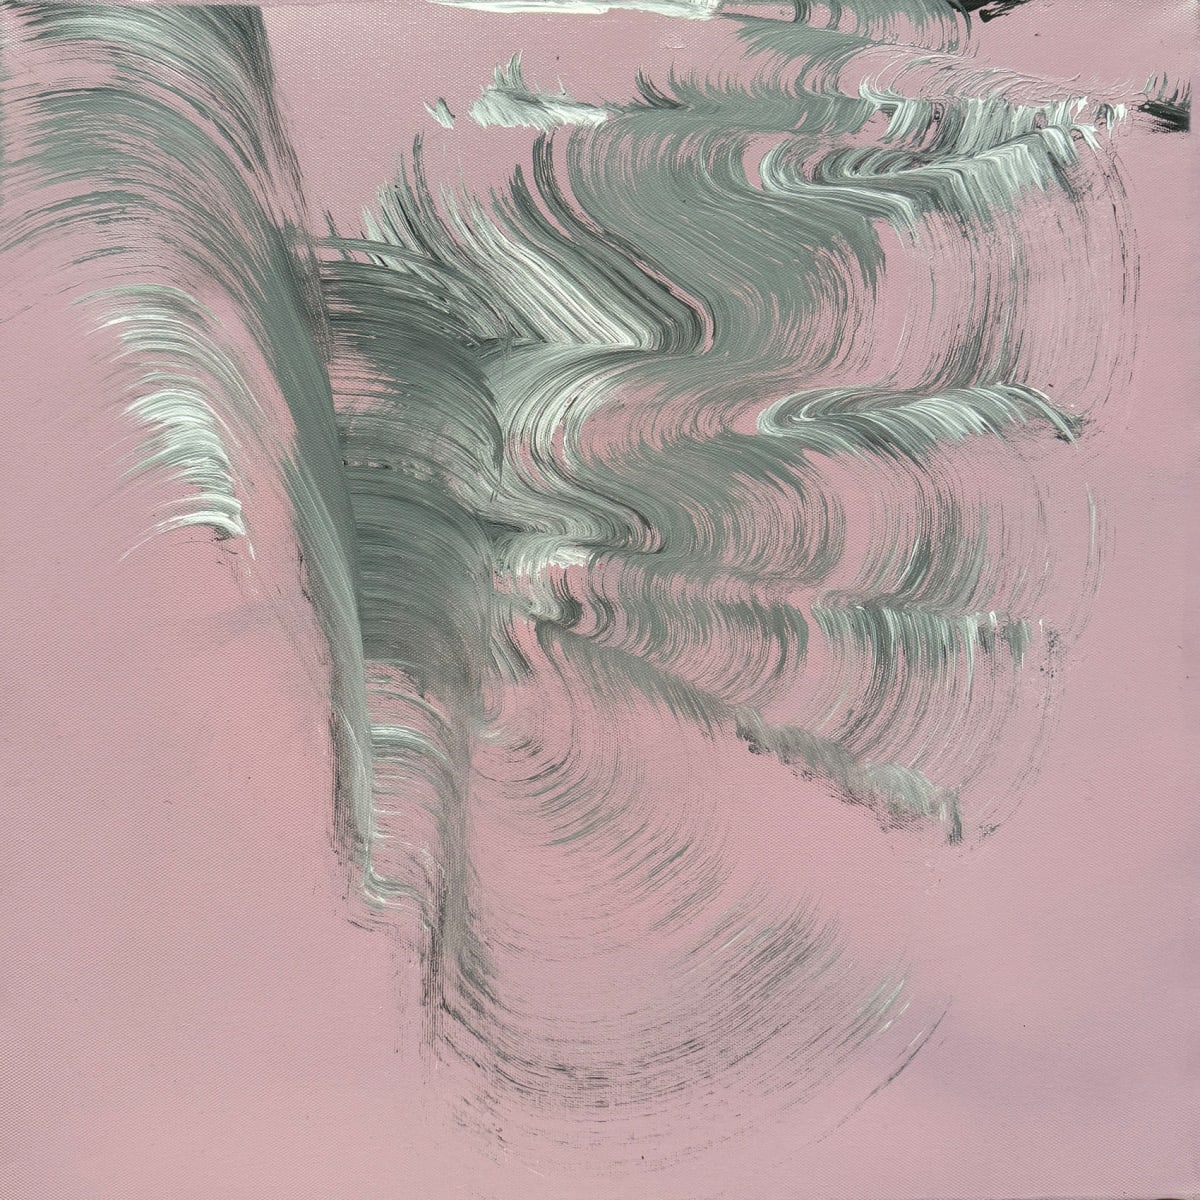 Pink Sky Waves 2 by Tina Psoinos  Image: Pink Sky Waves 2